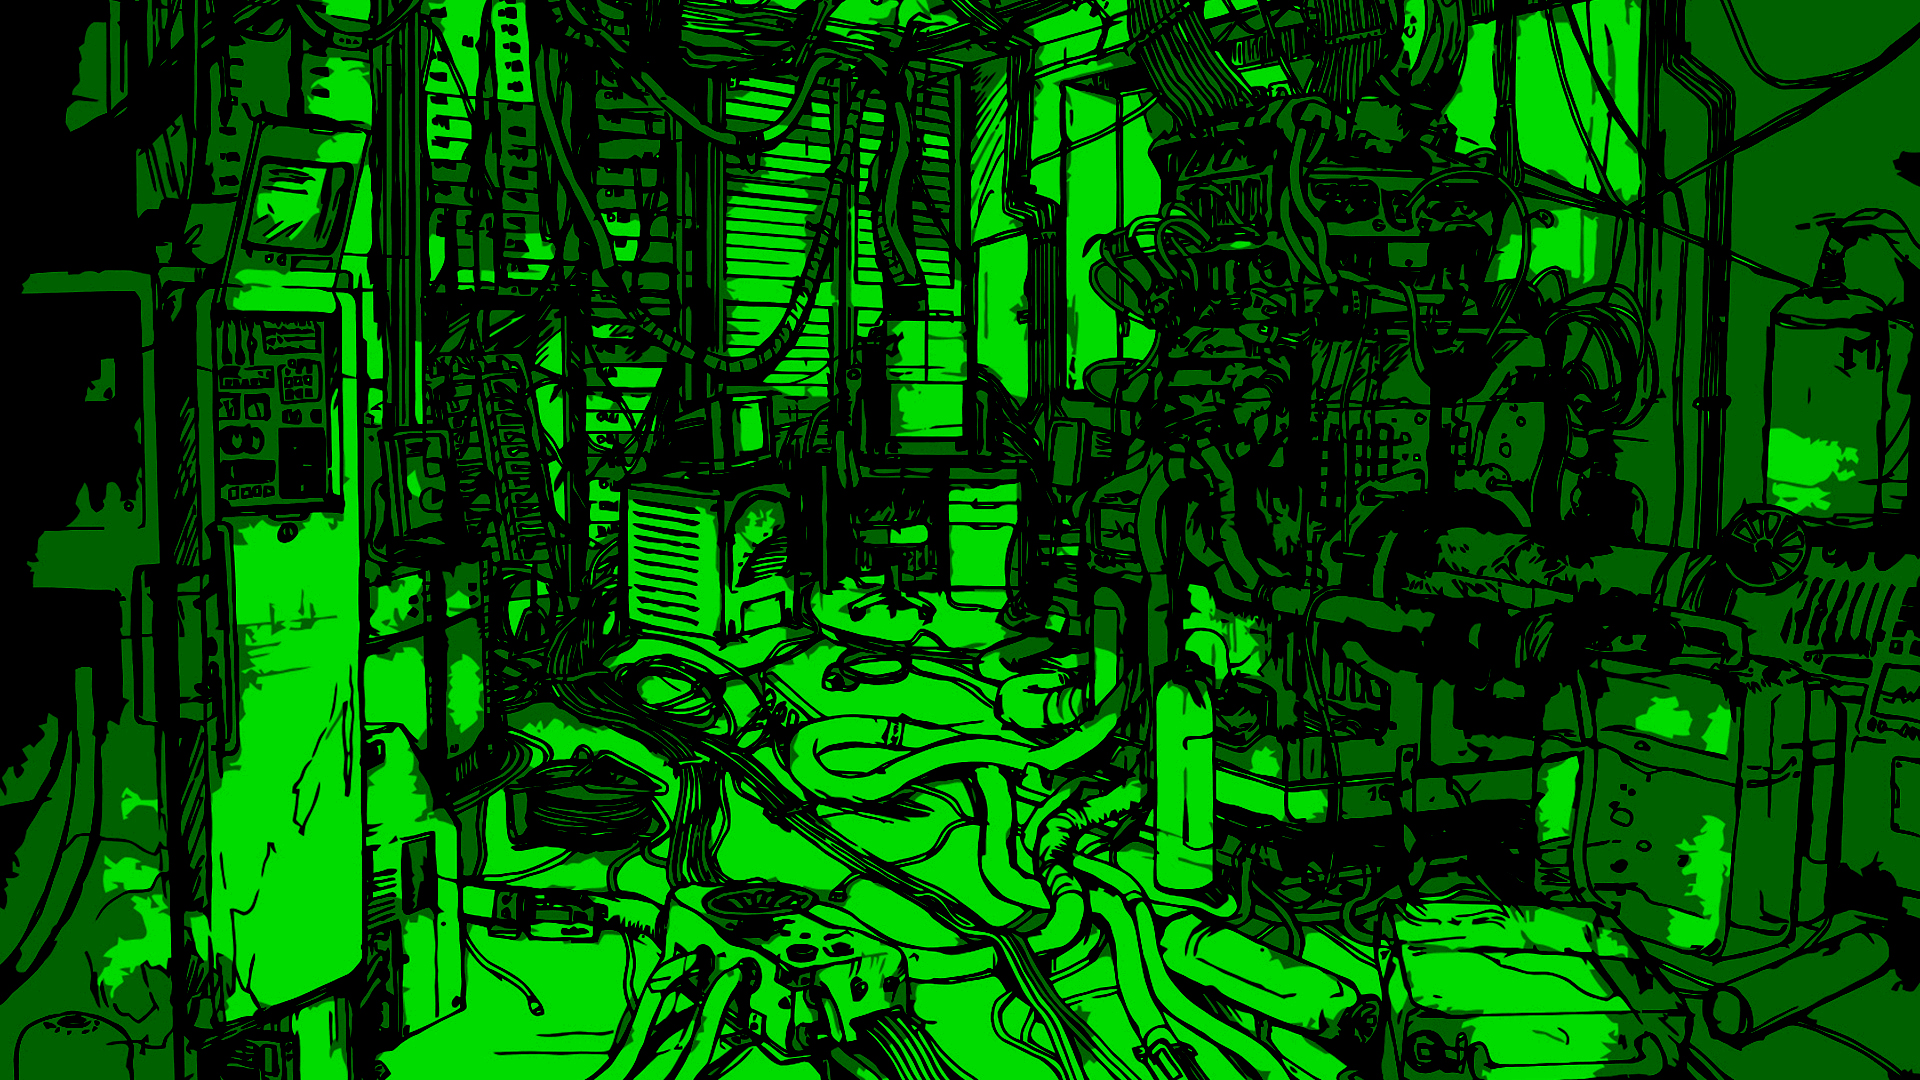 Anime 1920x1080 Serial Experiments Lain cyberpunk artwork green